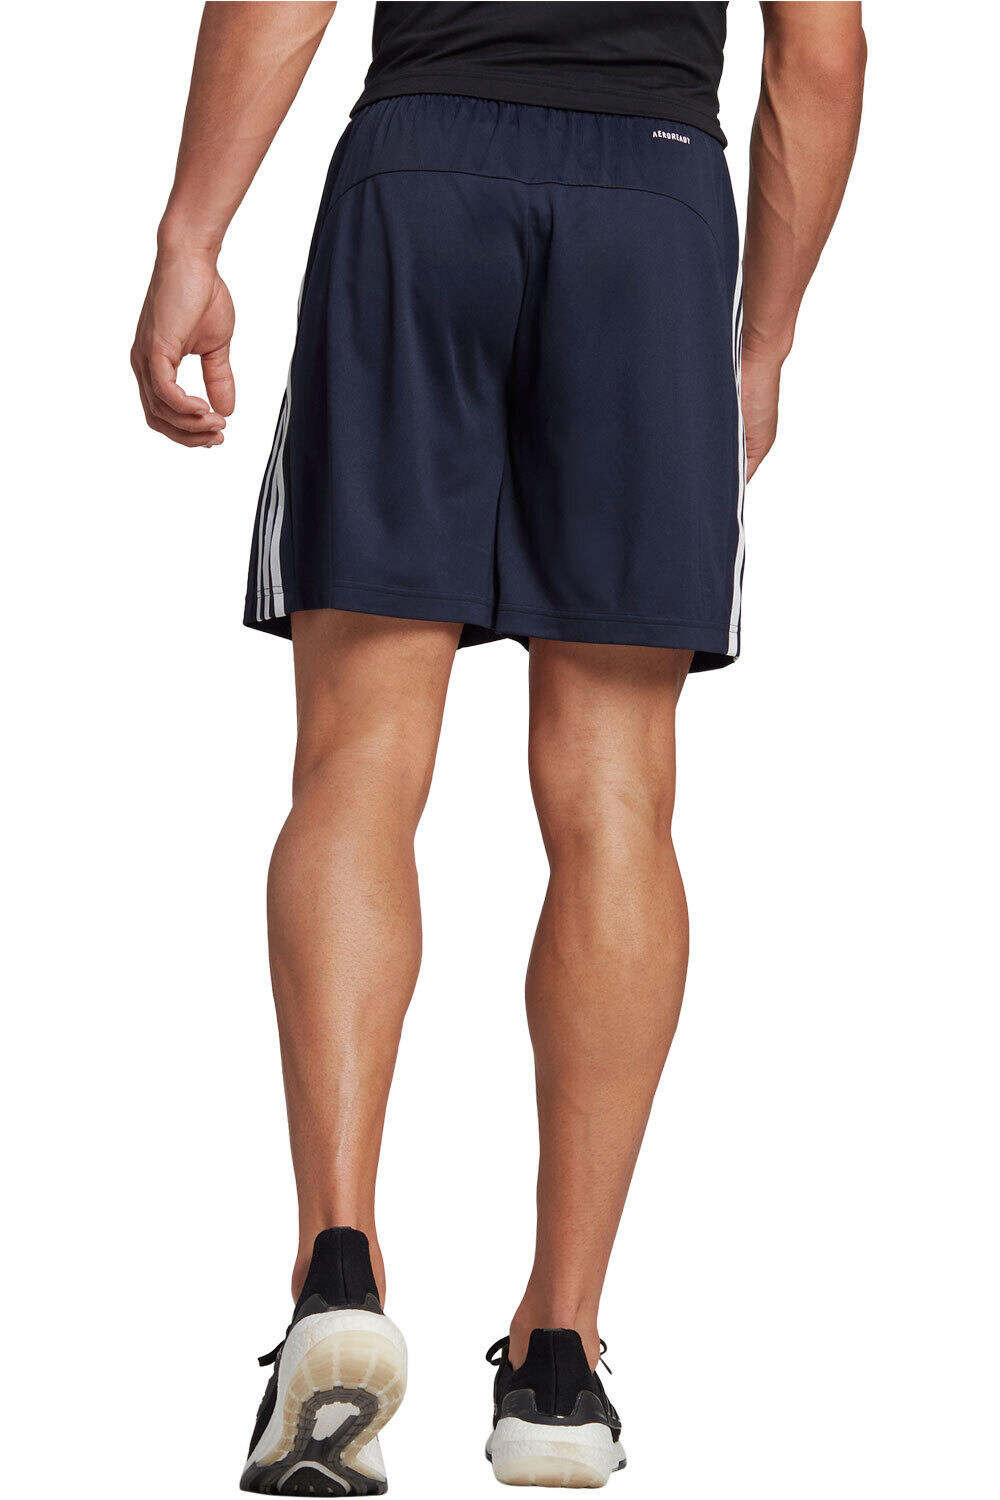 adidas pantalón corto fitness hombre Primeblue Designed To Move Sport 3 bandas vista trasera